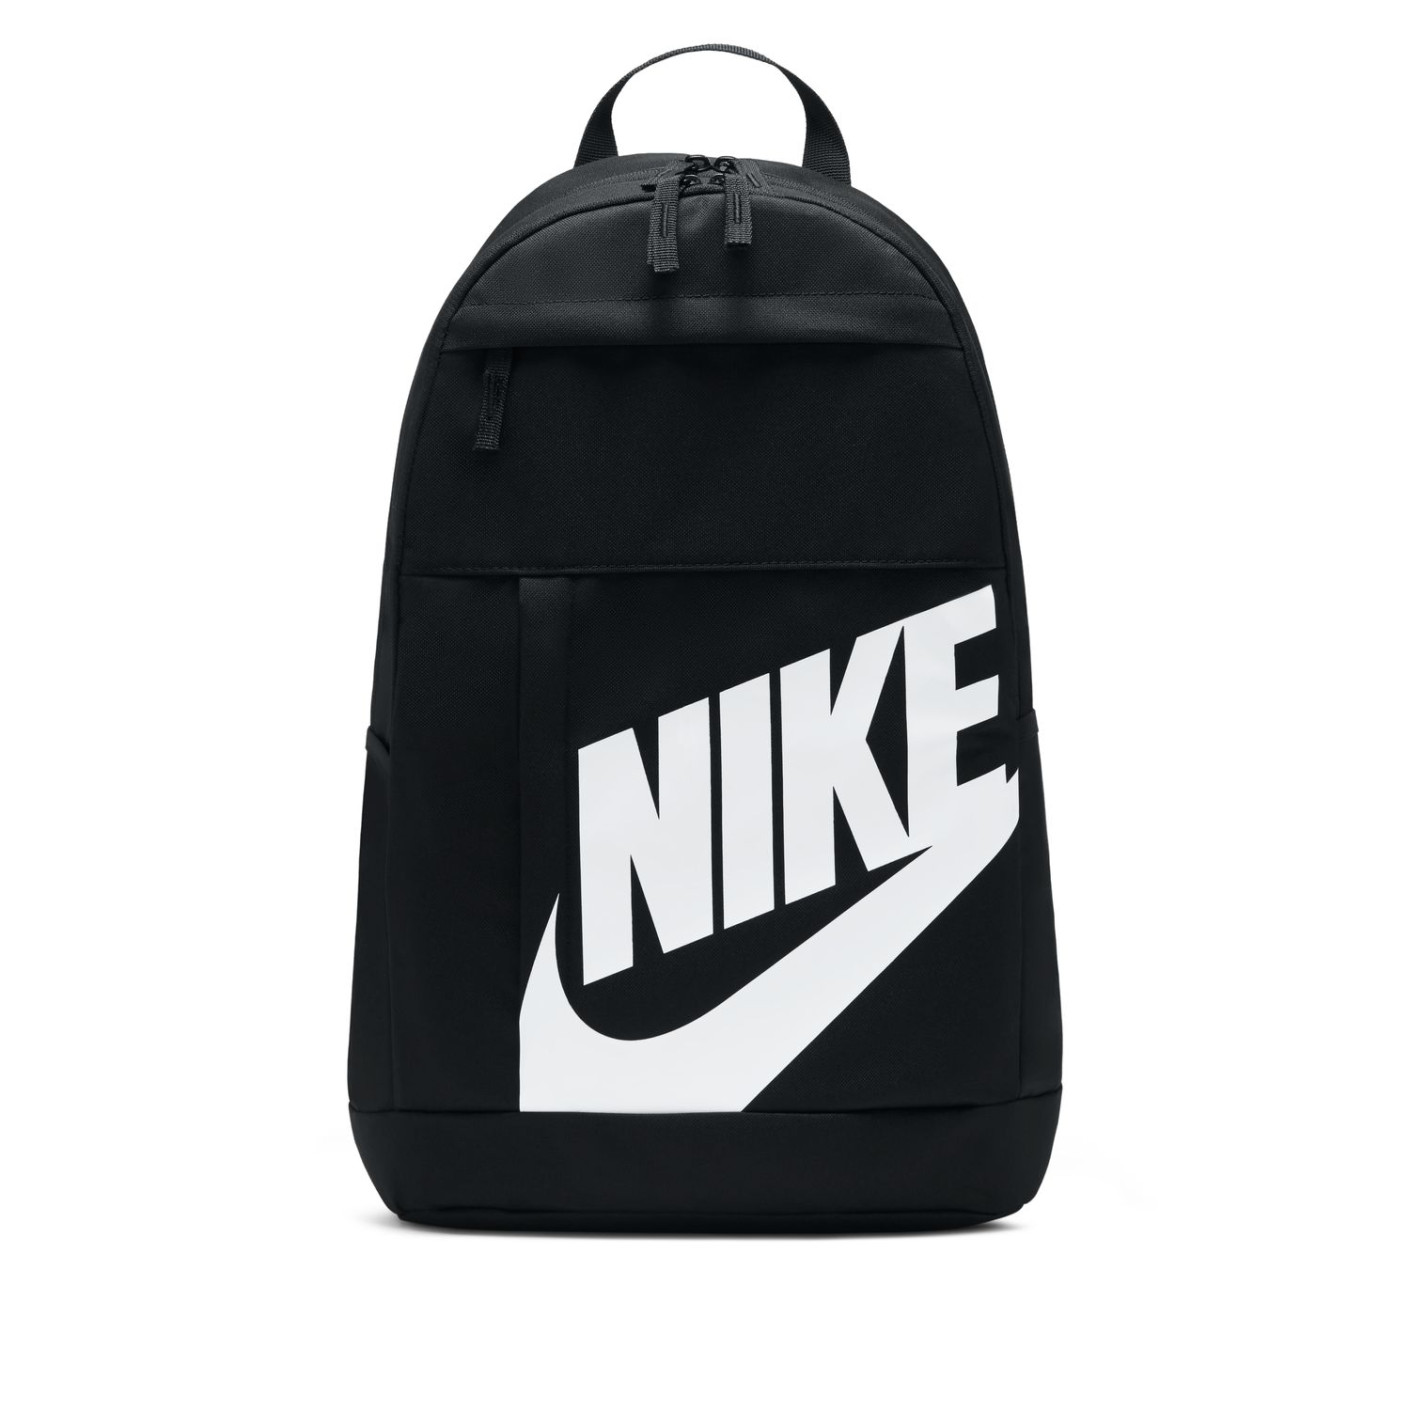 Nike Elemental Backpack Black White - KNVBshop.nl